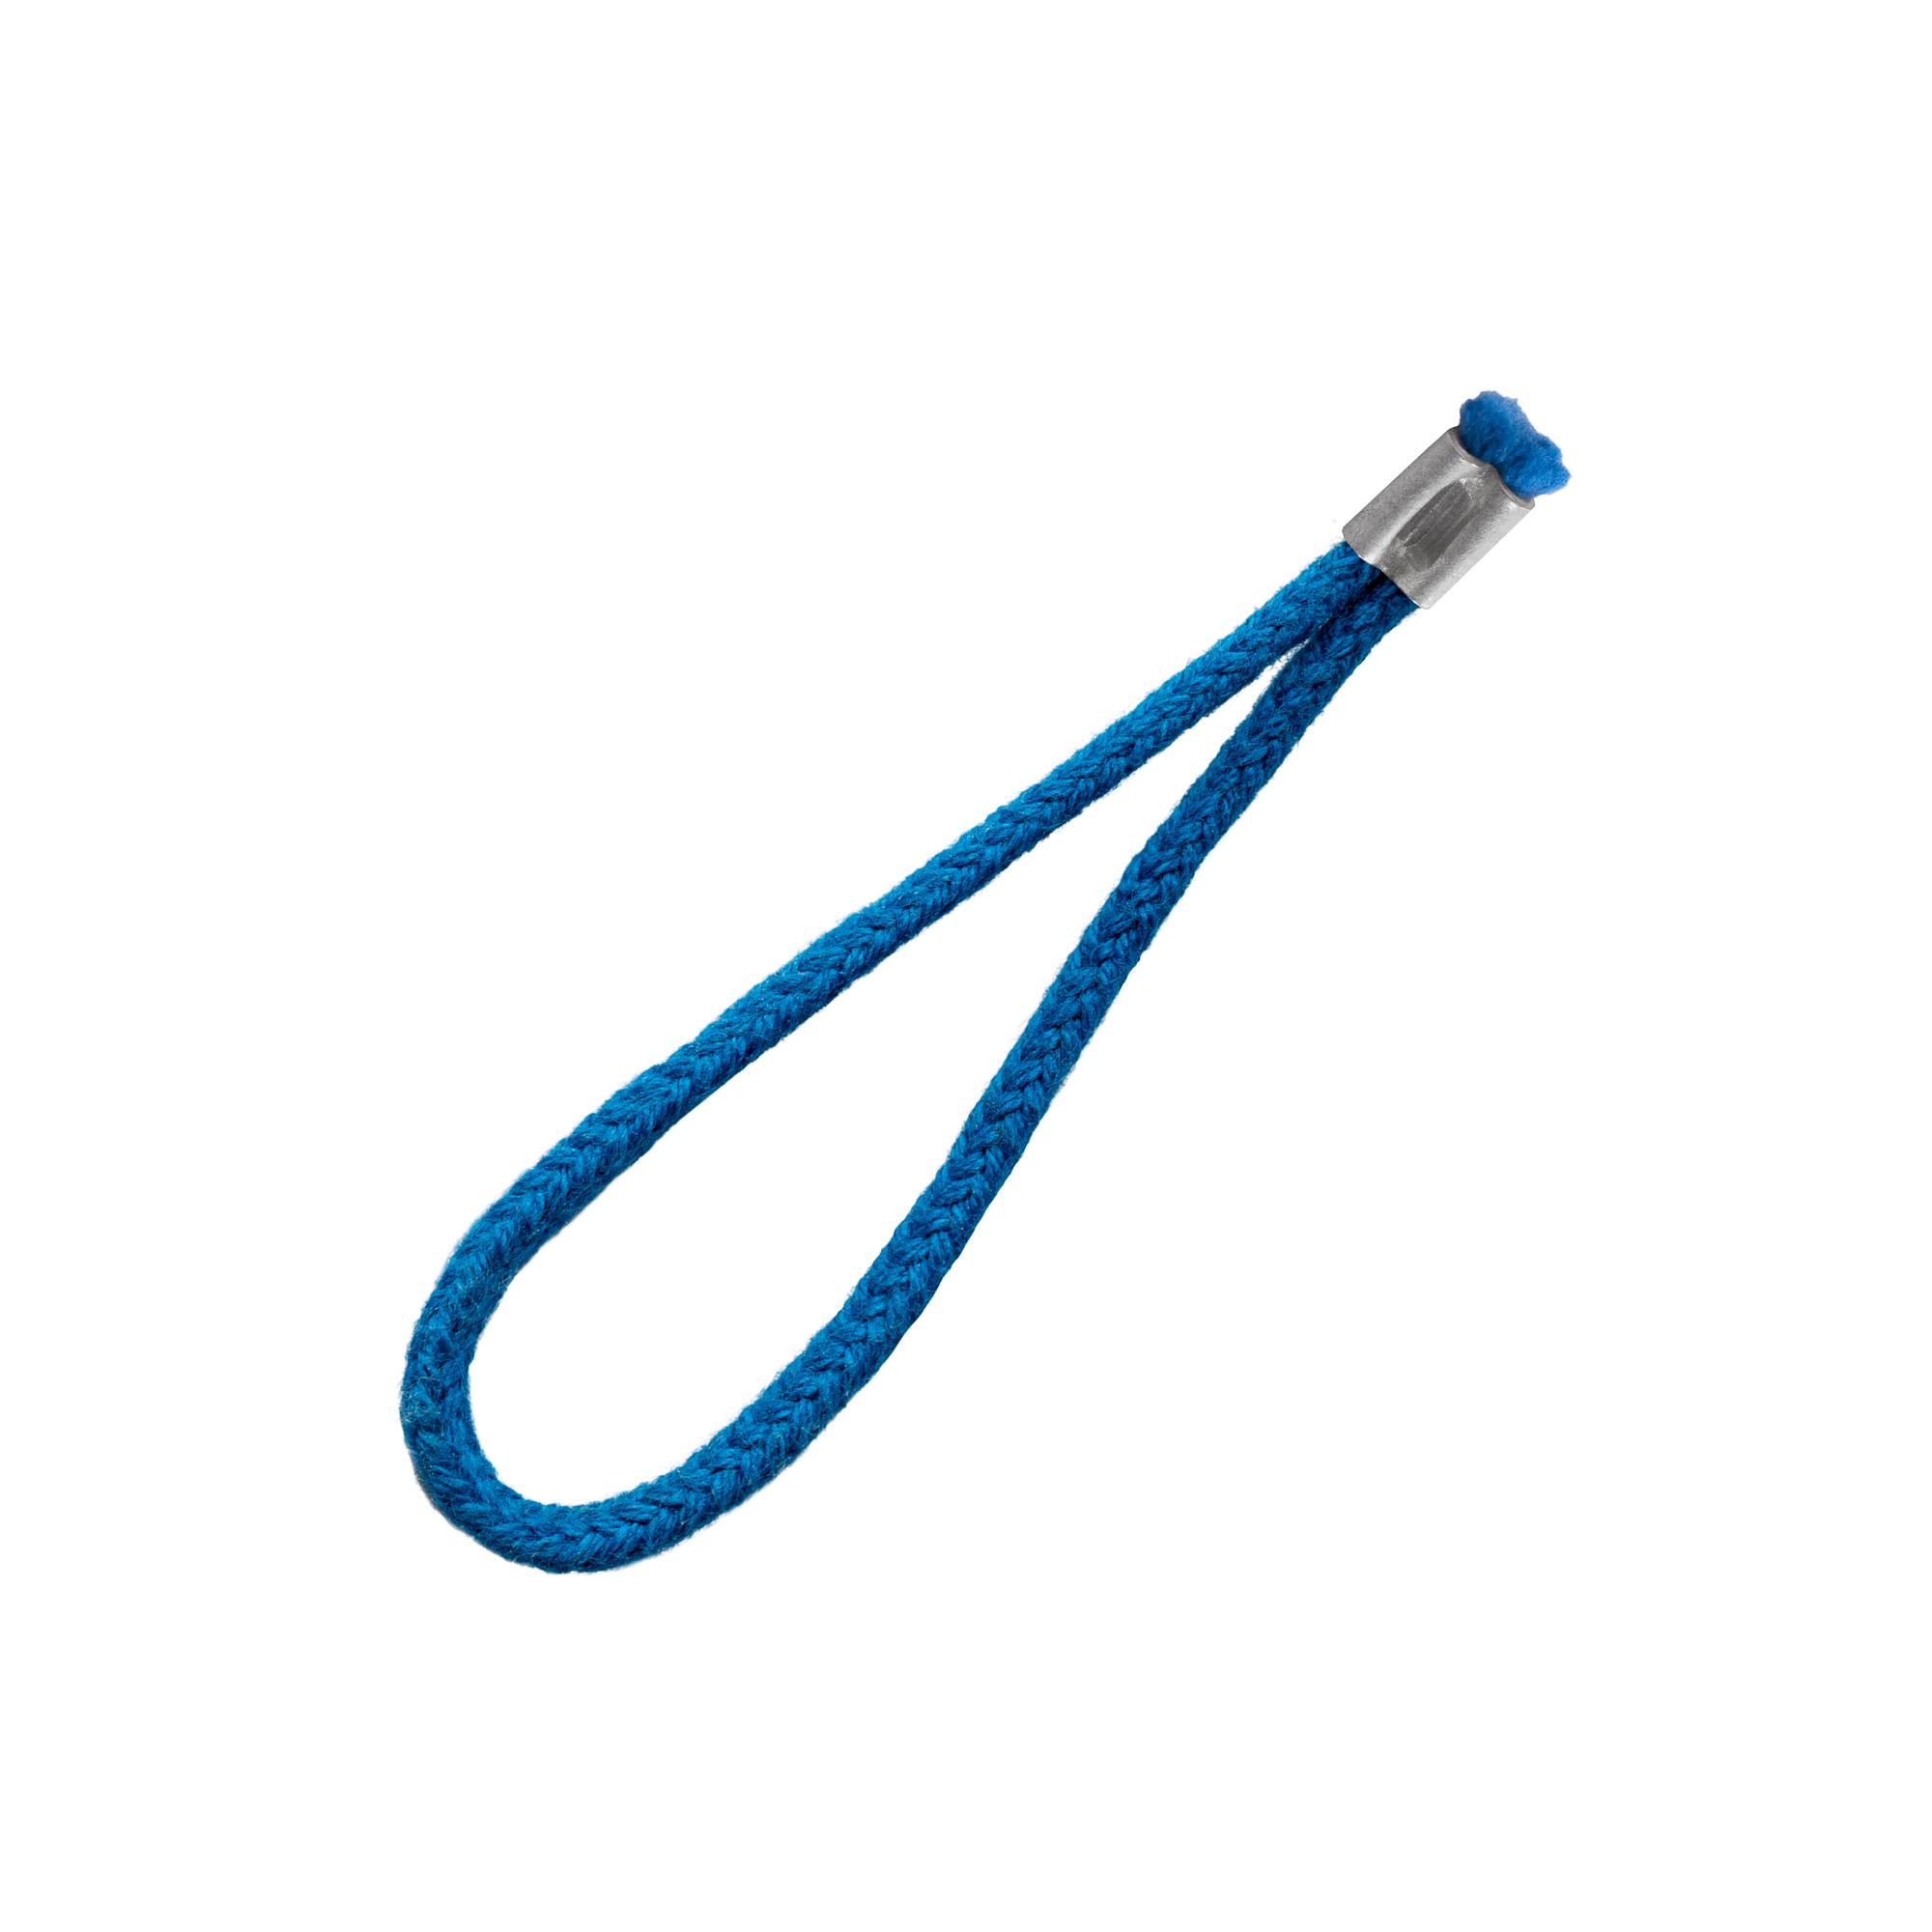 blue coloured cord for Muhle companion safety razor